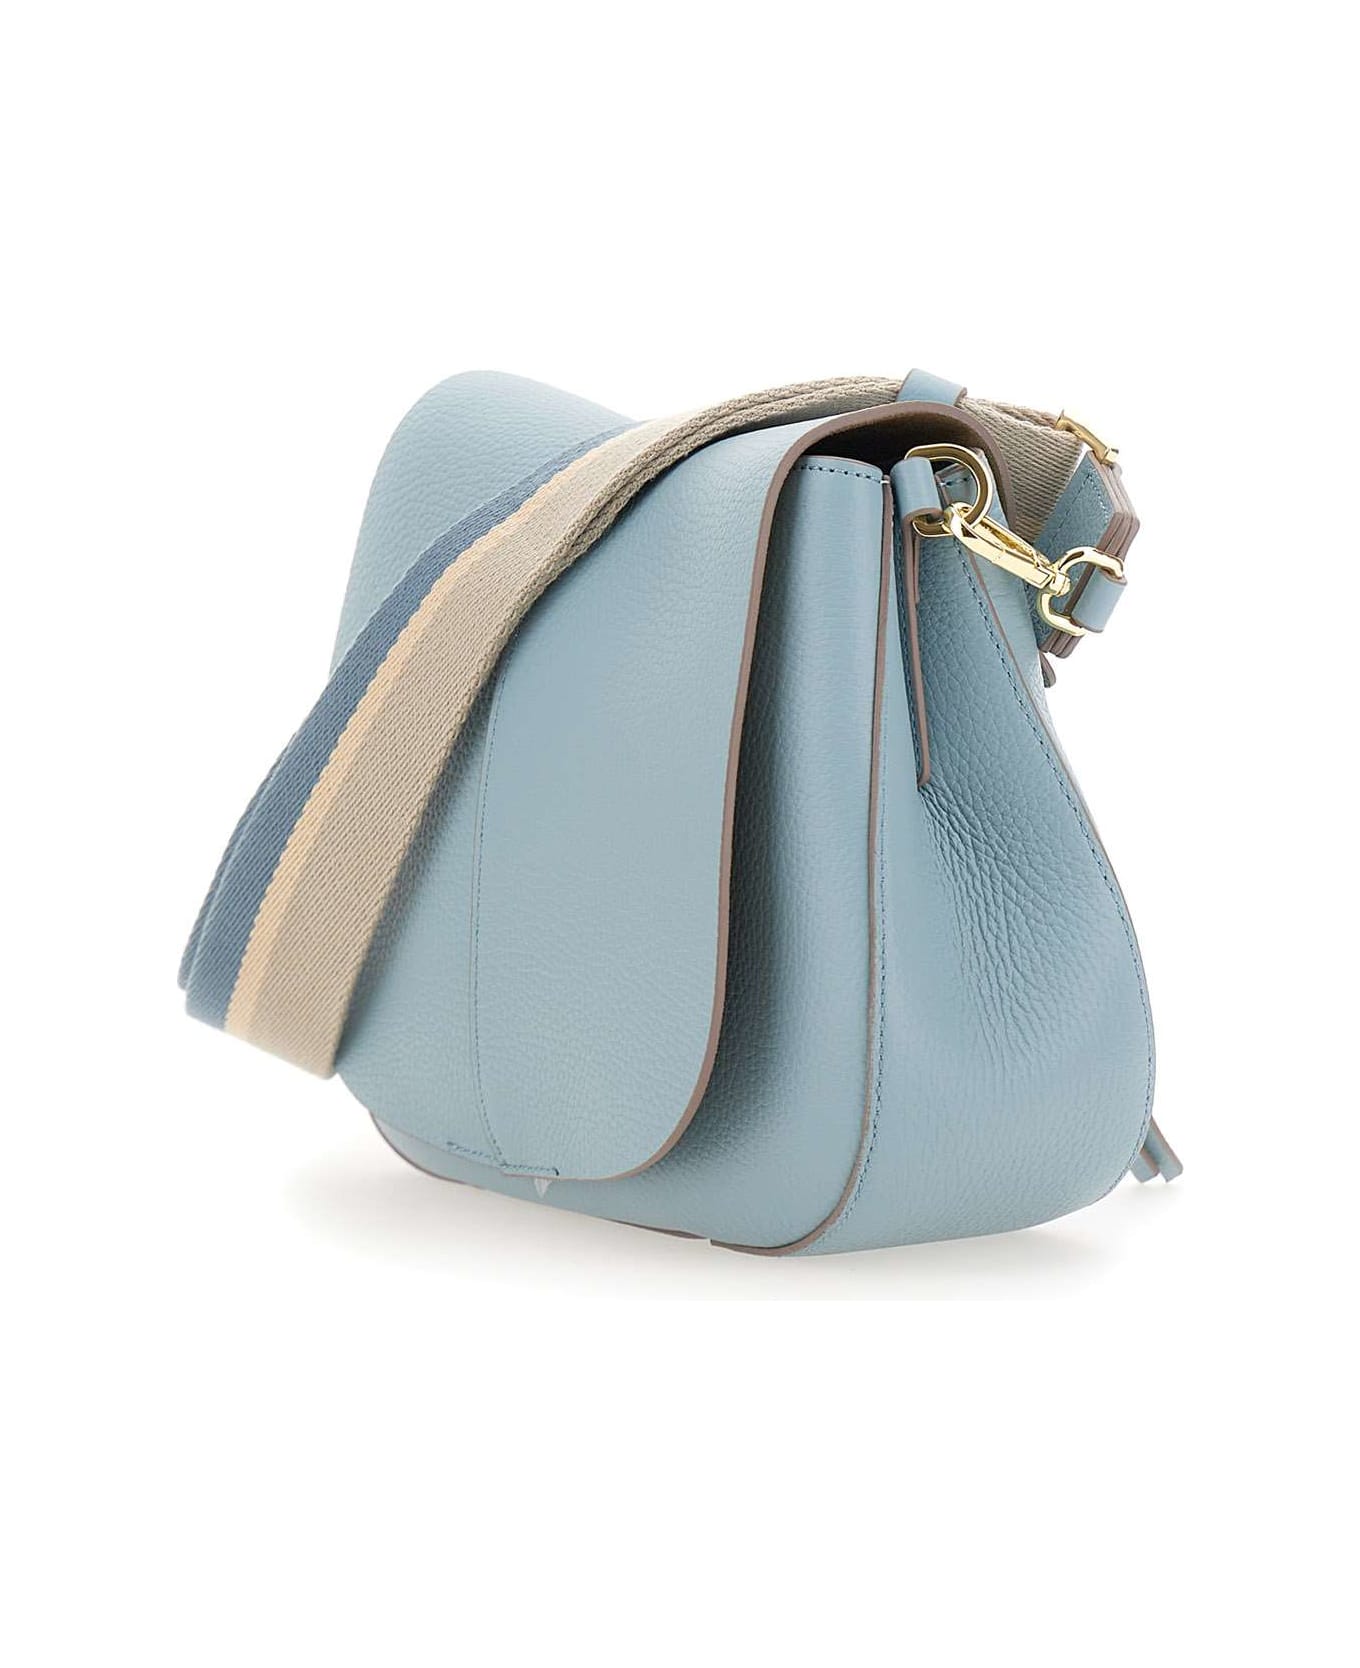 Gianni Chiarini "helena Round" Leather Bag - LIGHT BLUE トートバッグ